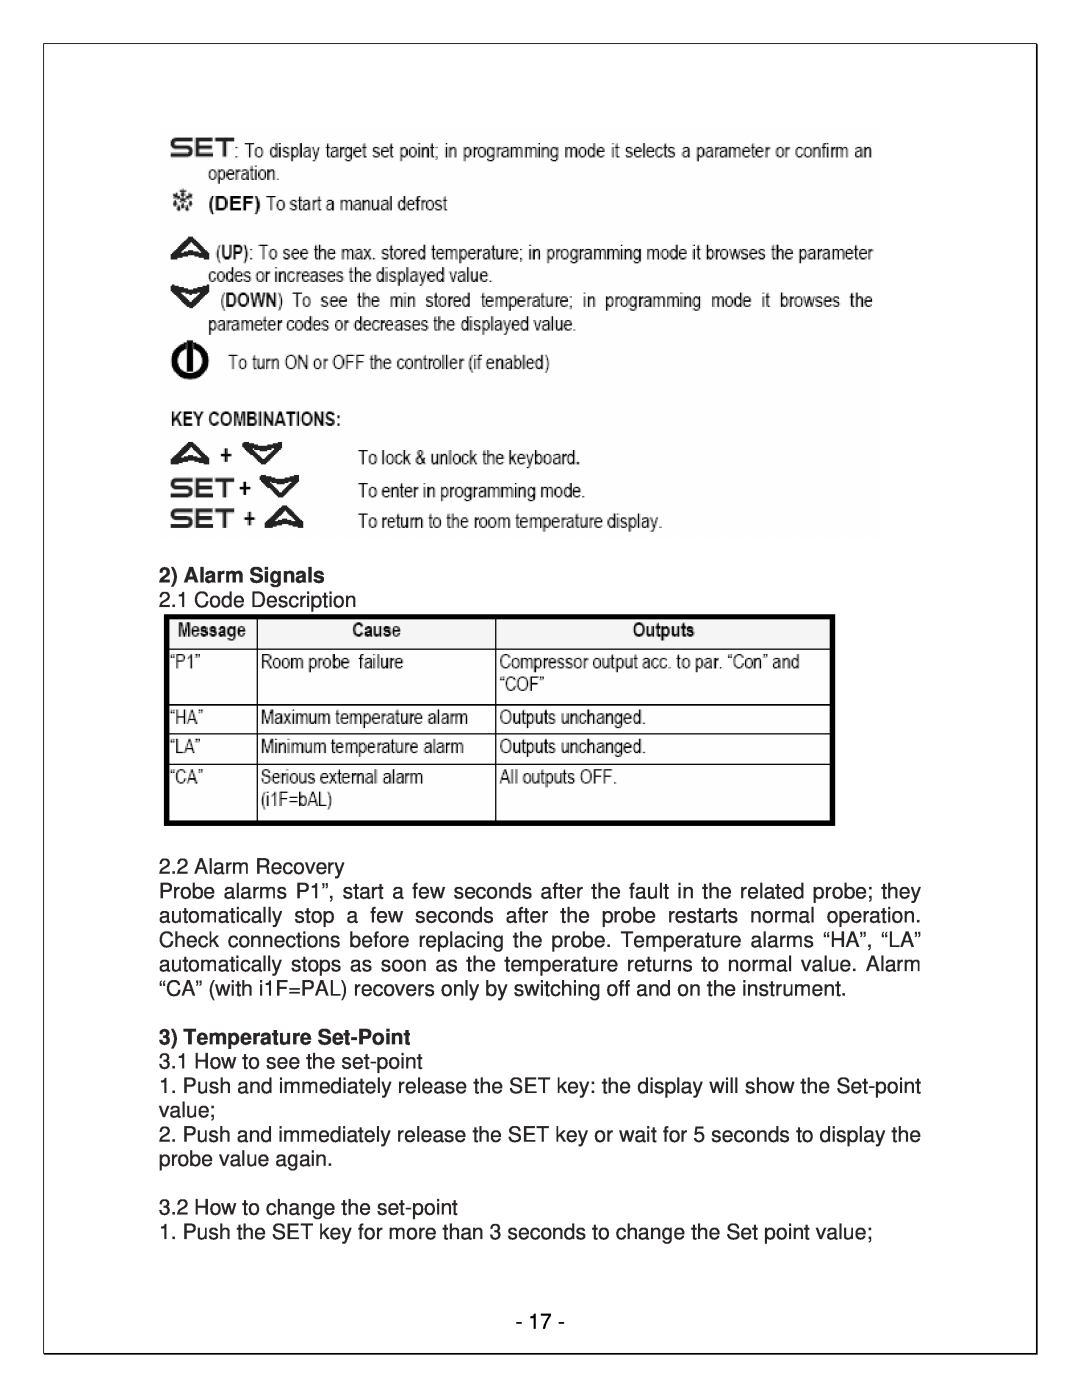 Vinotemp WM-250SCU, VINO-6500SSL manual Alarm Signals 2.1 Code Description 2.2 Alarm Recovery, How to change the set-point 